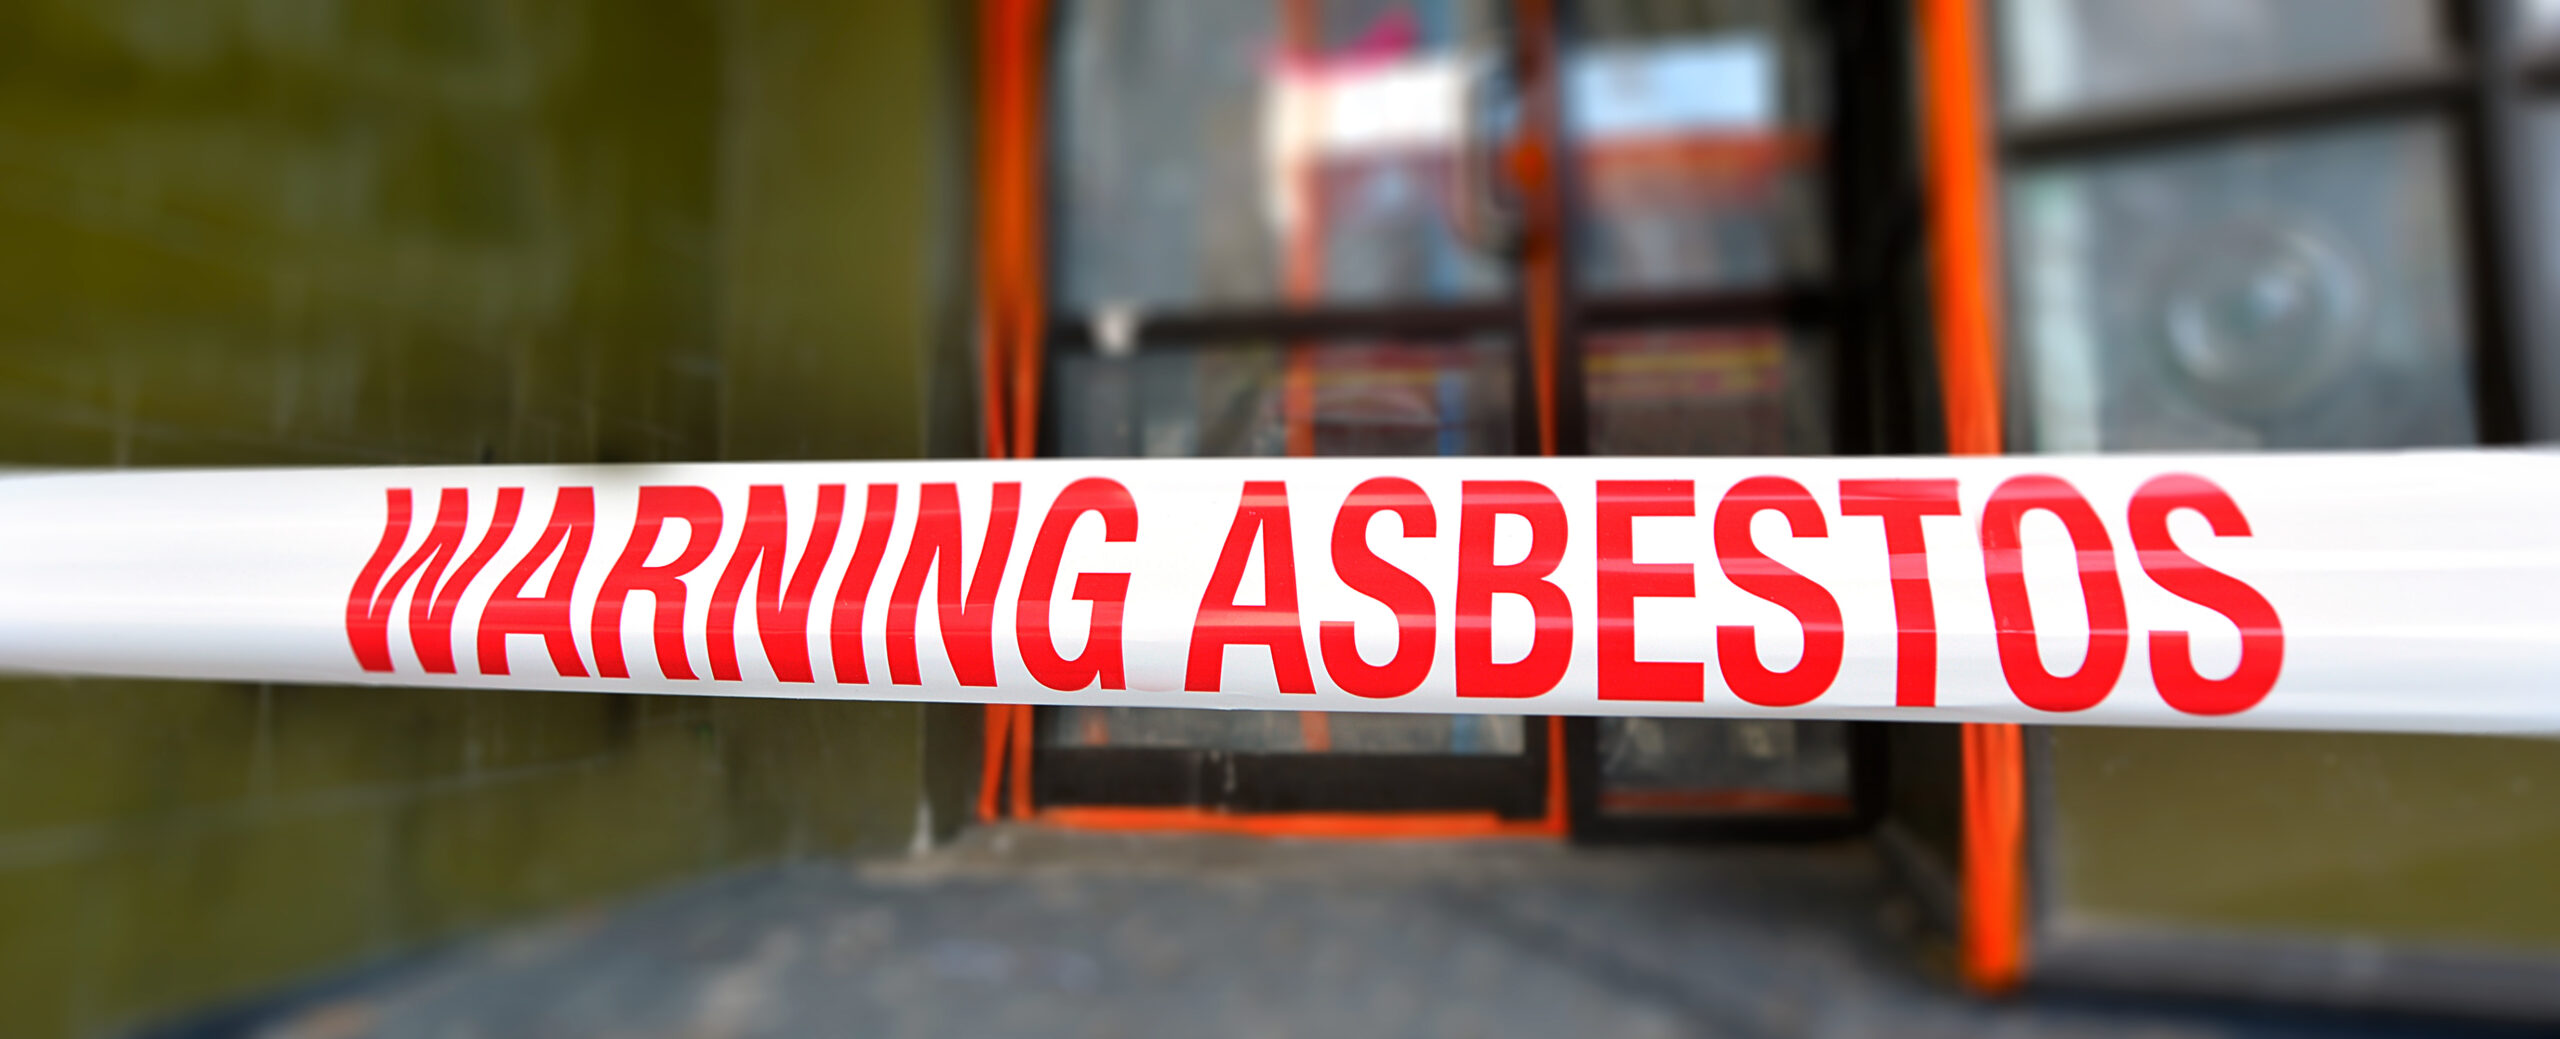 Control of Asbestos Regulations